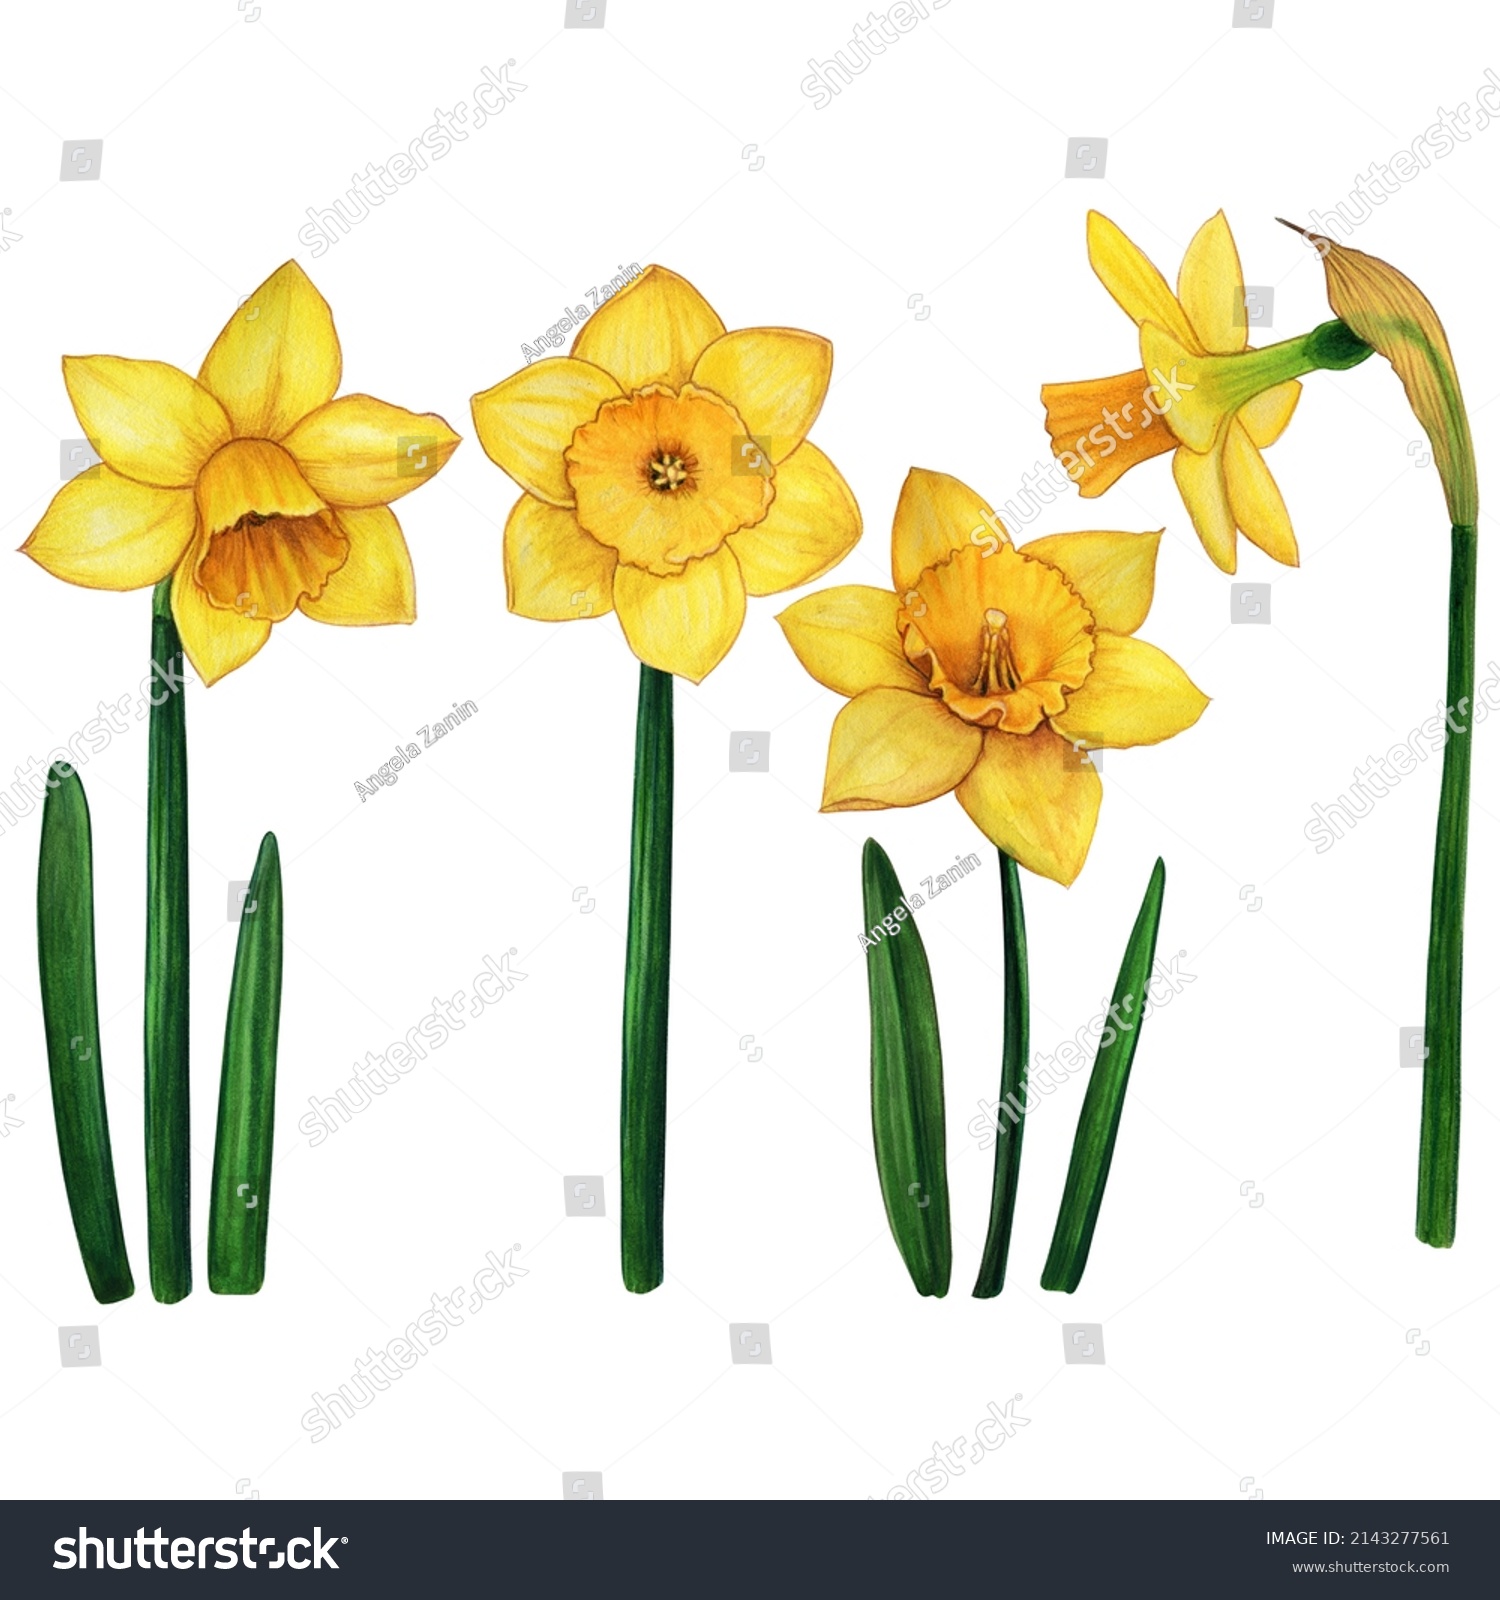 Watercolor Hand Drawn Realistic Daffodils Stock Illustration 2143277561 ...